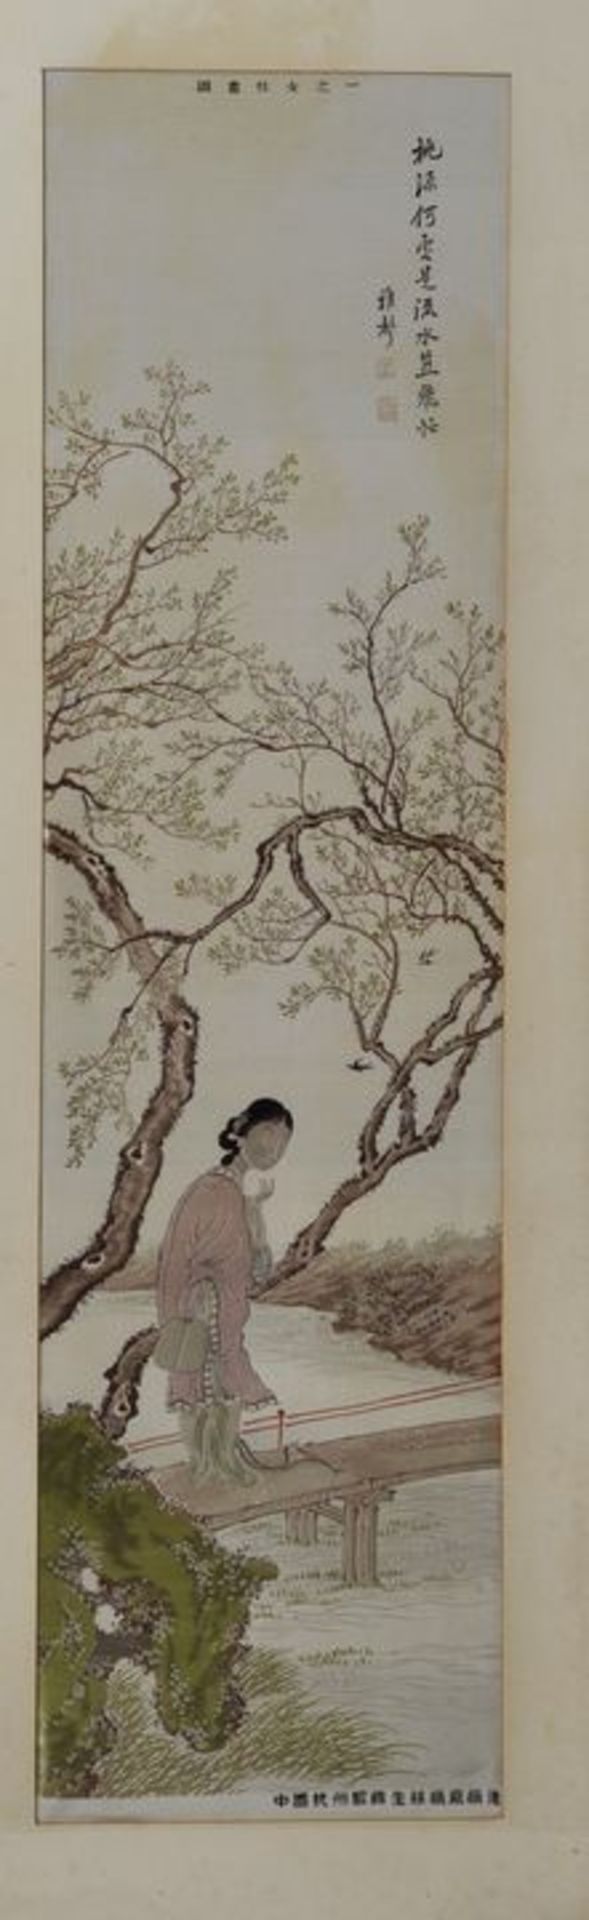 Stickbild, China, um 1900/ Anf. 20. Jh.